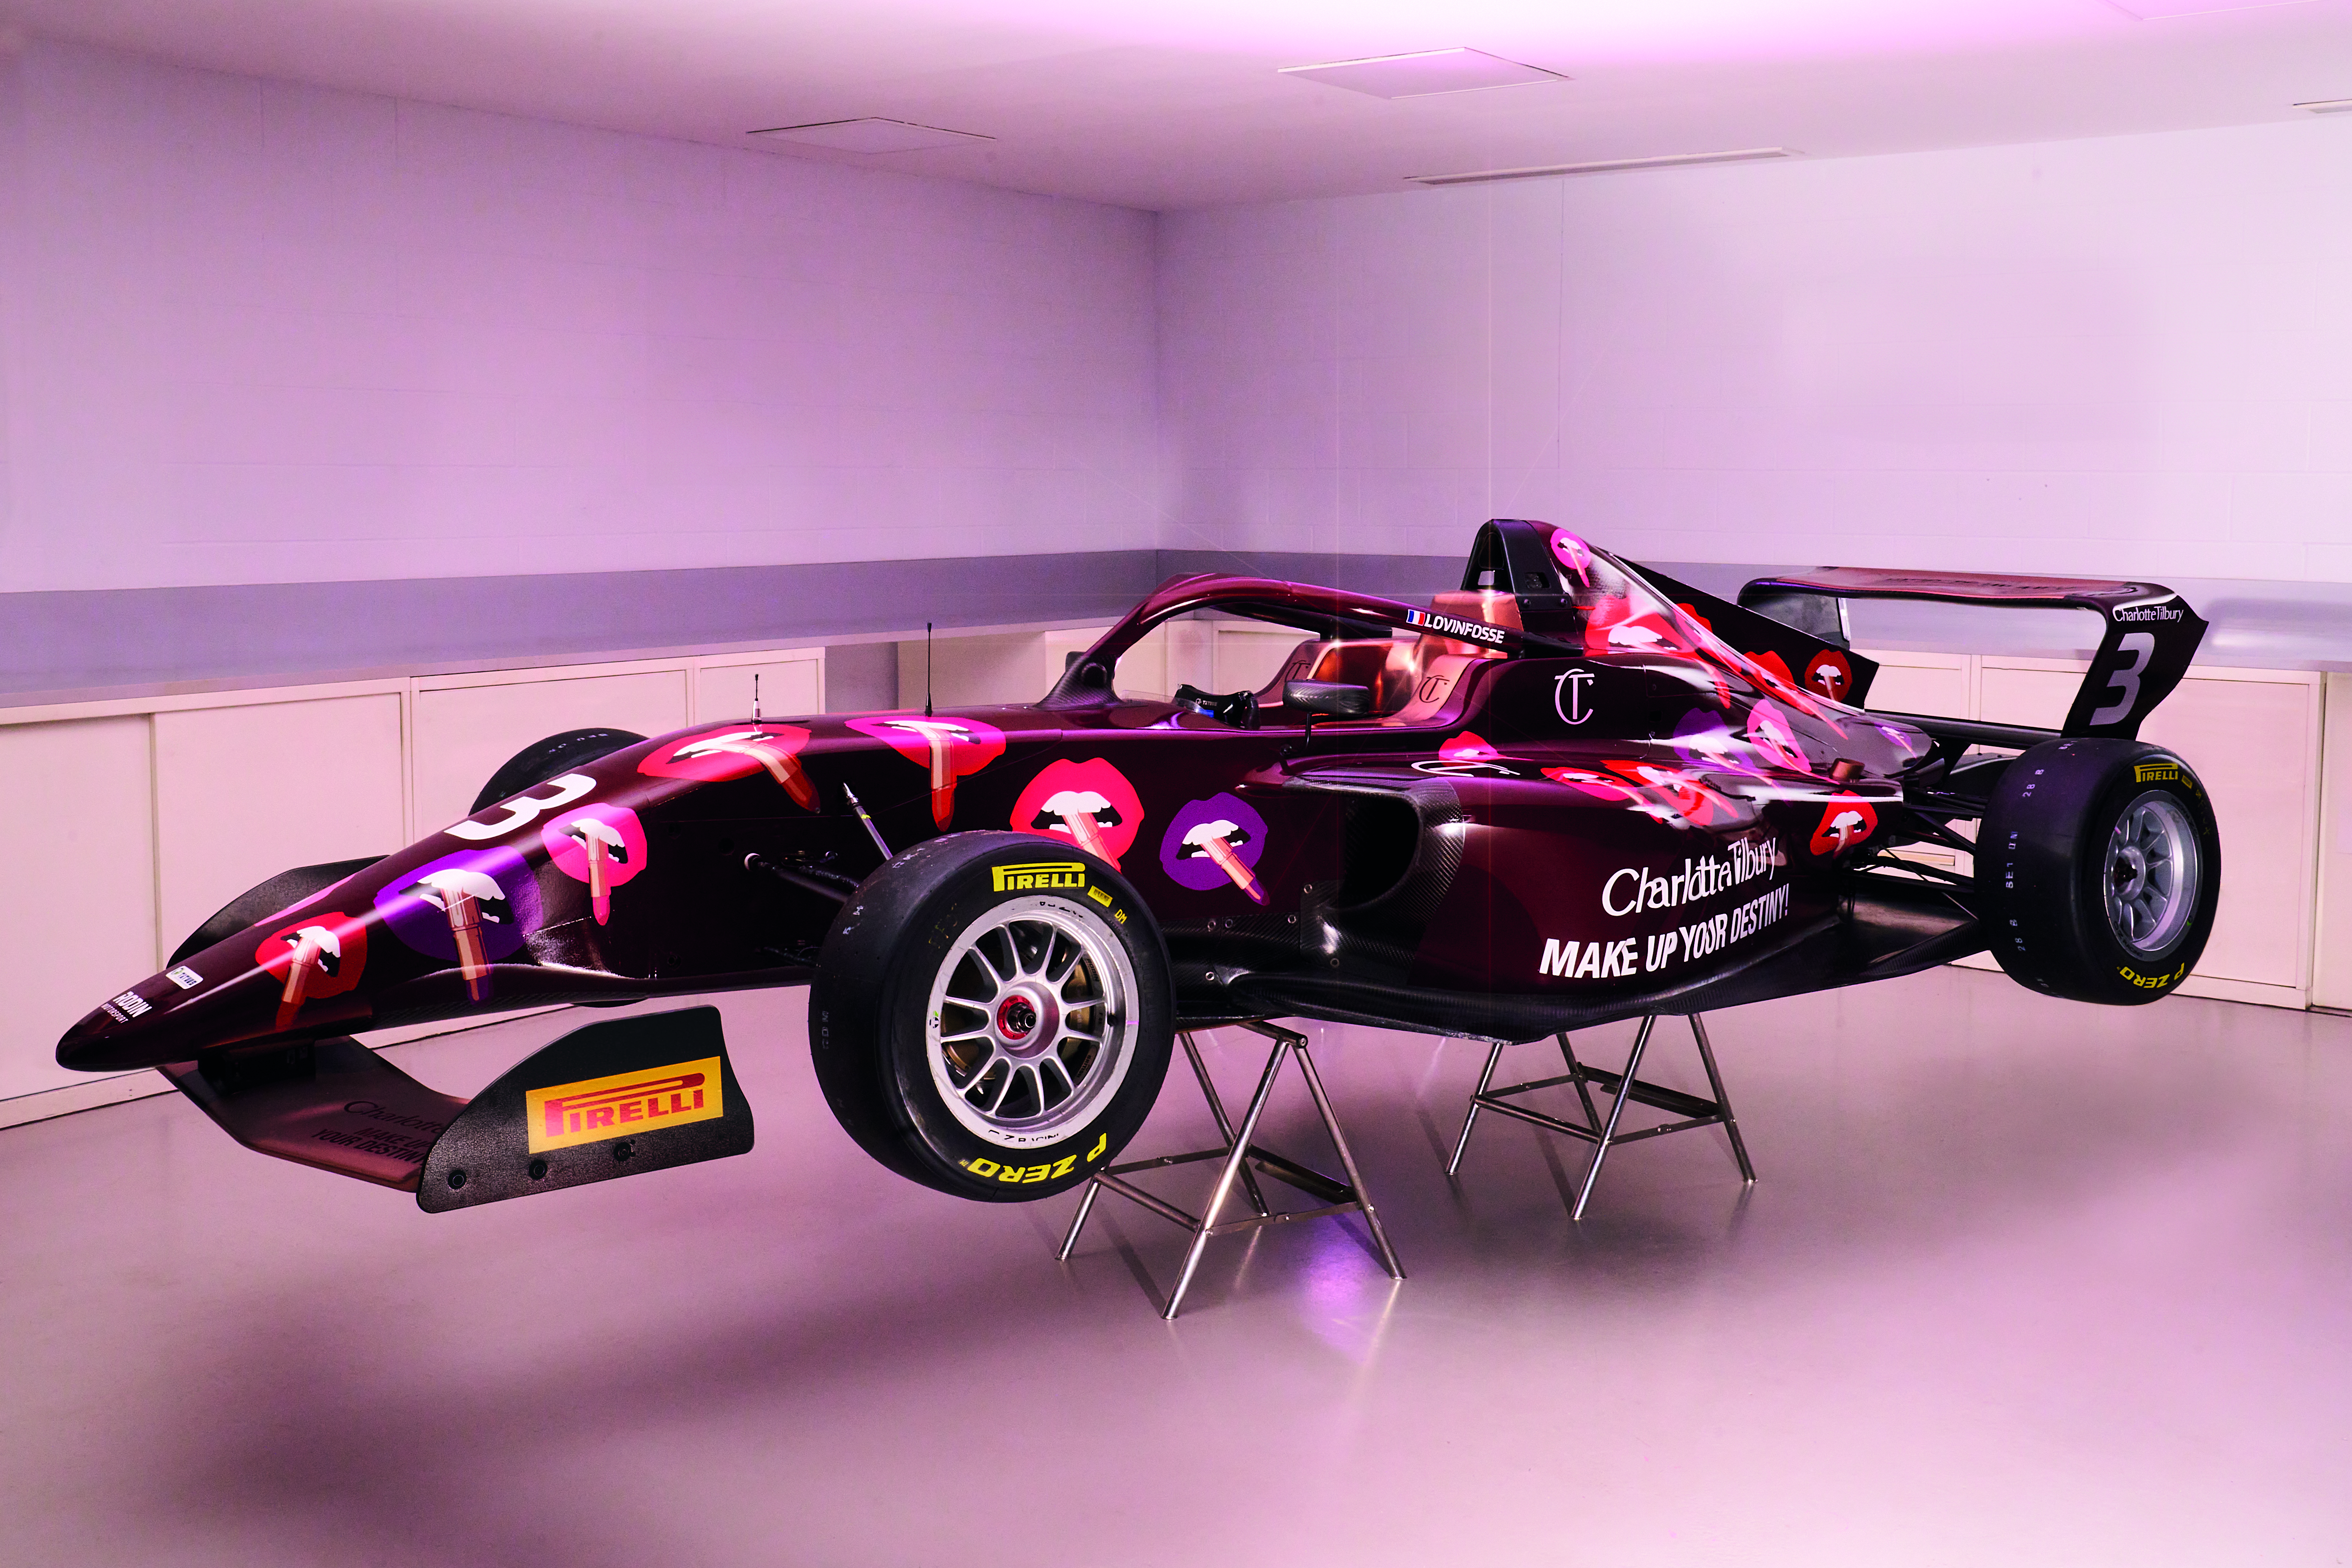 Charlotte Tilbury Formula 1 Academy Rennwagen